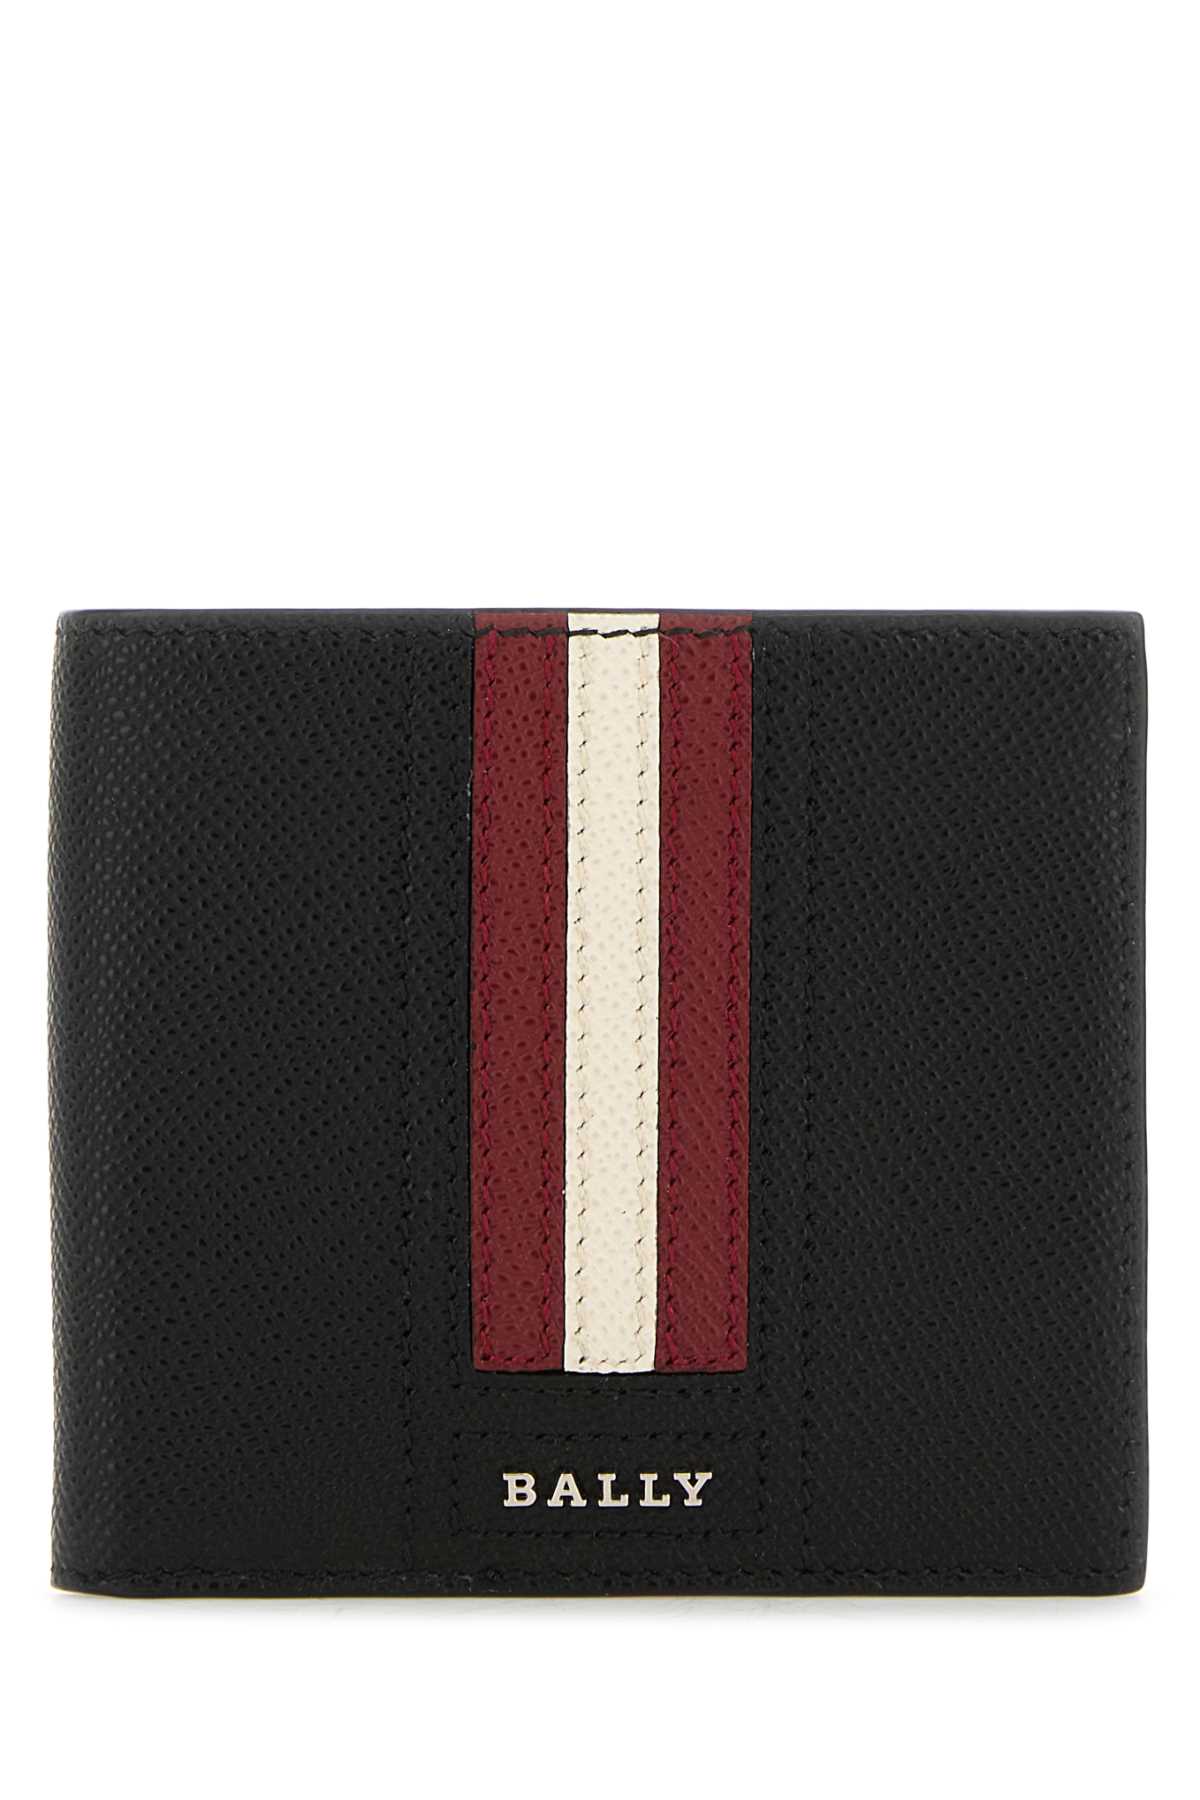 Bally Black Leather Trasai Wallet